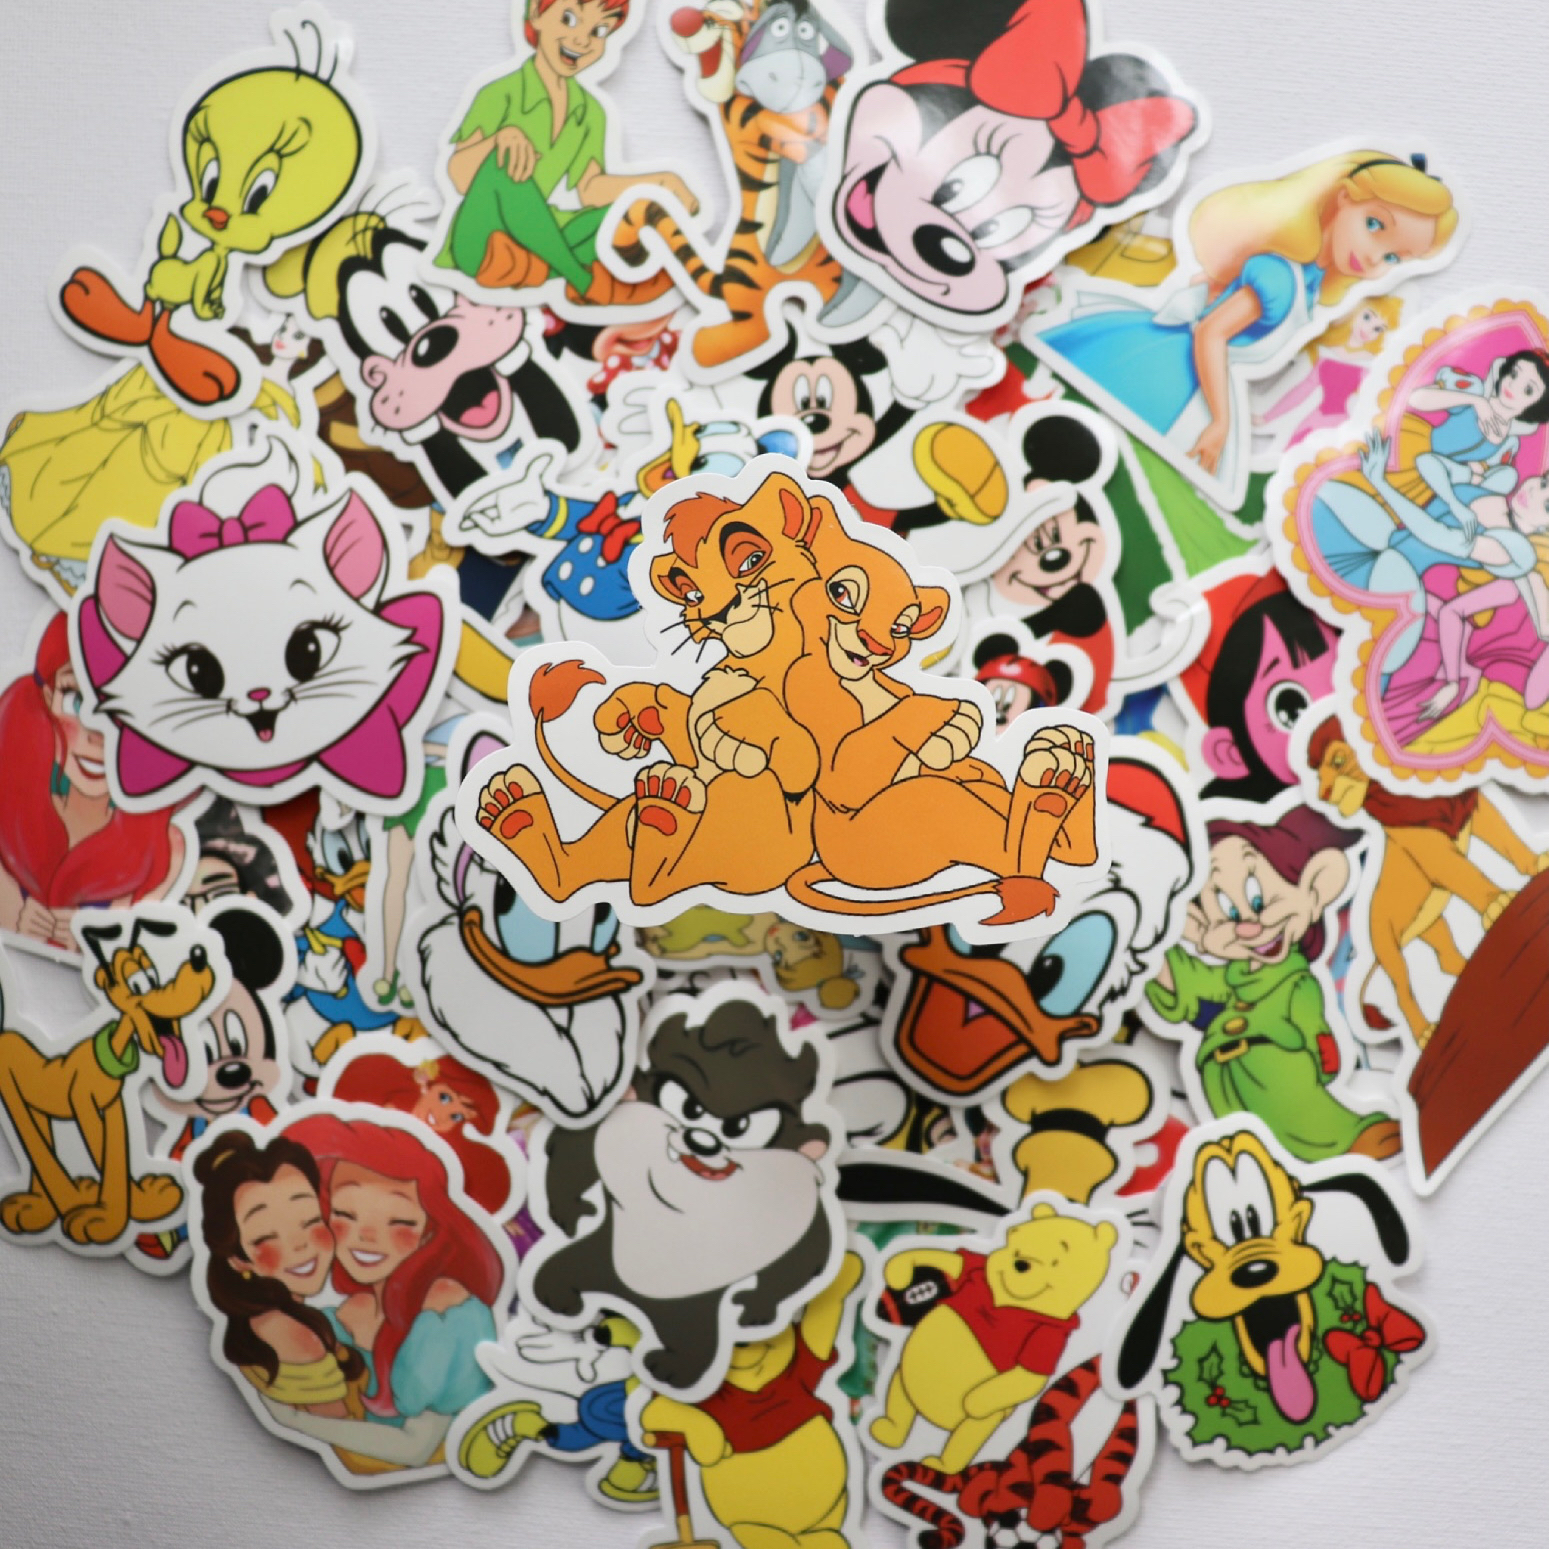 Disney sticker sets